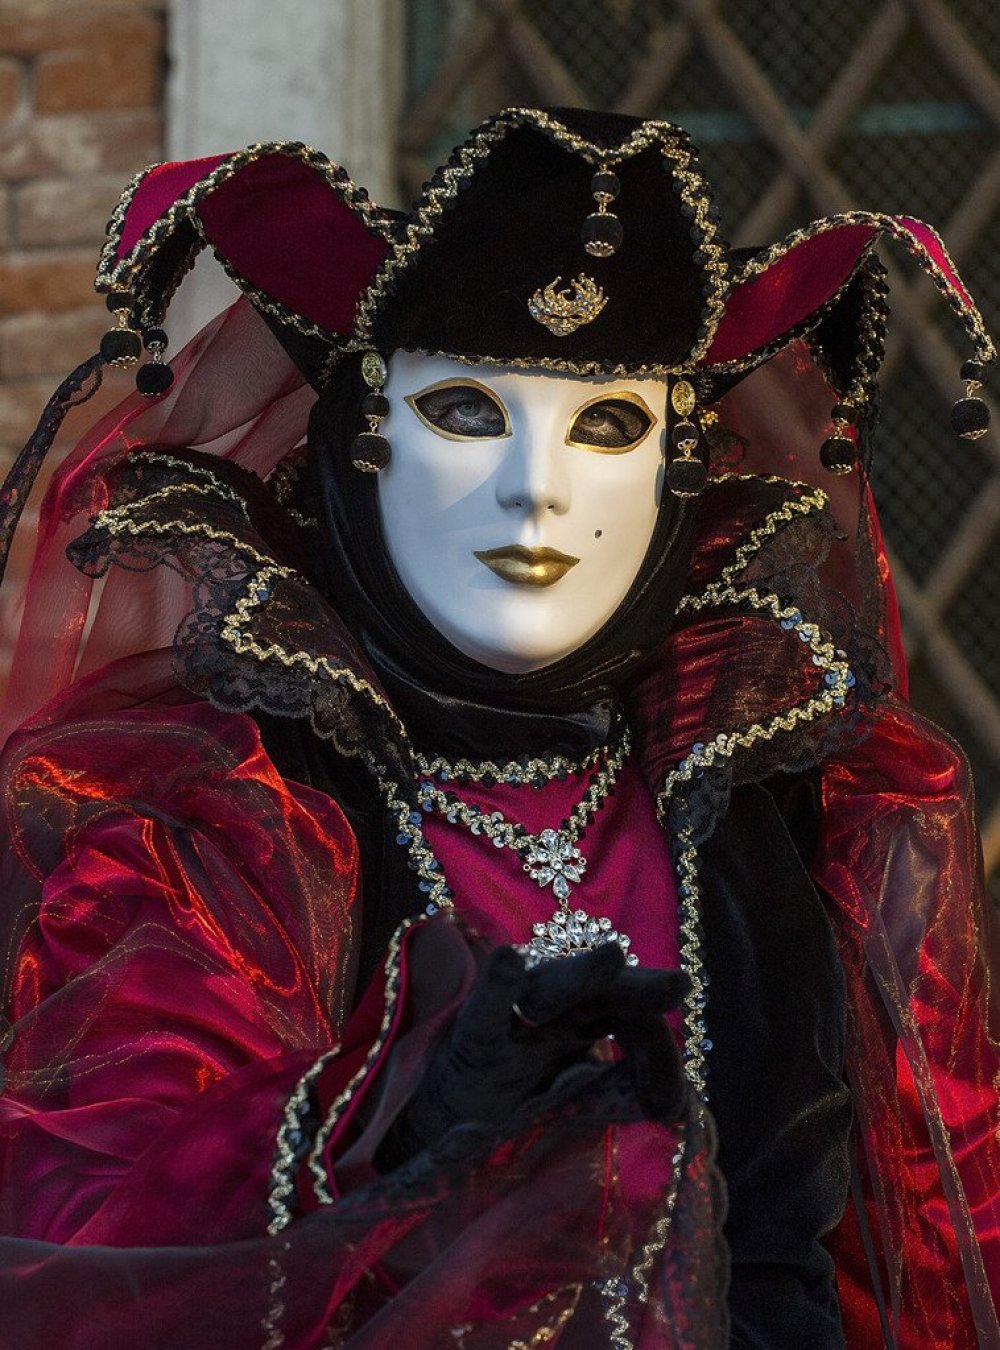 Venetian Carnival in All Its Glory